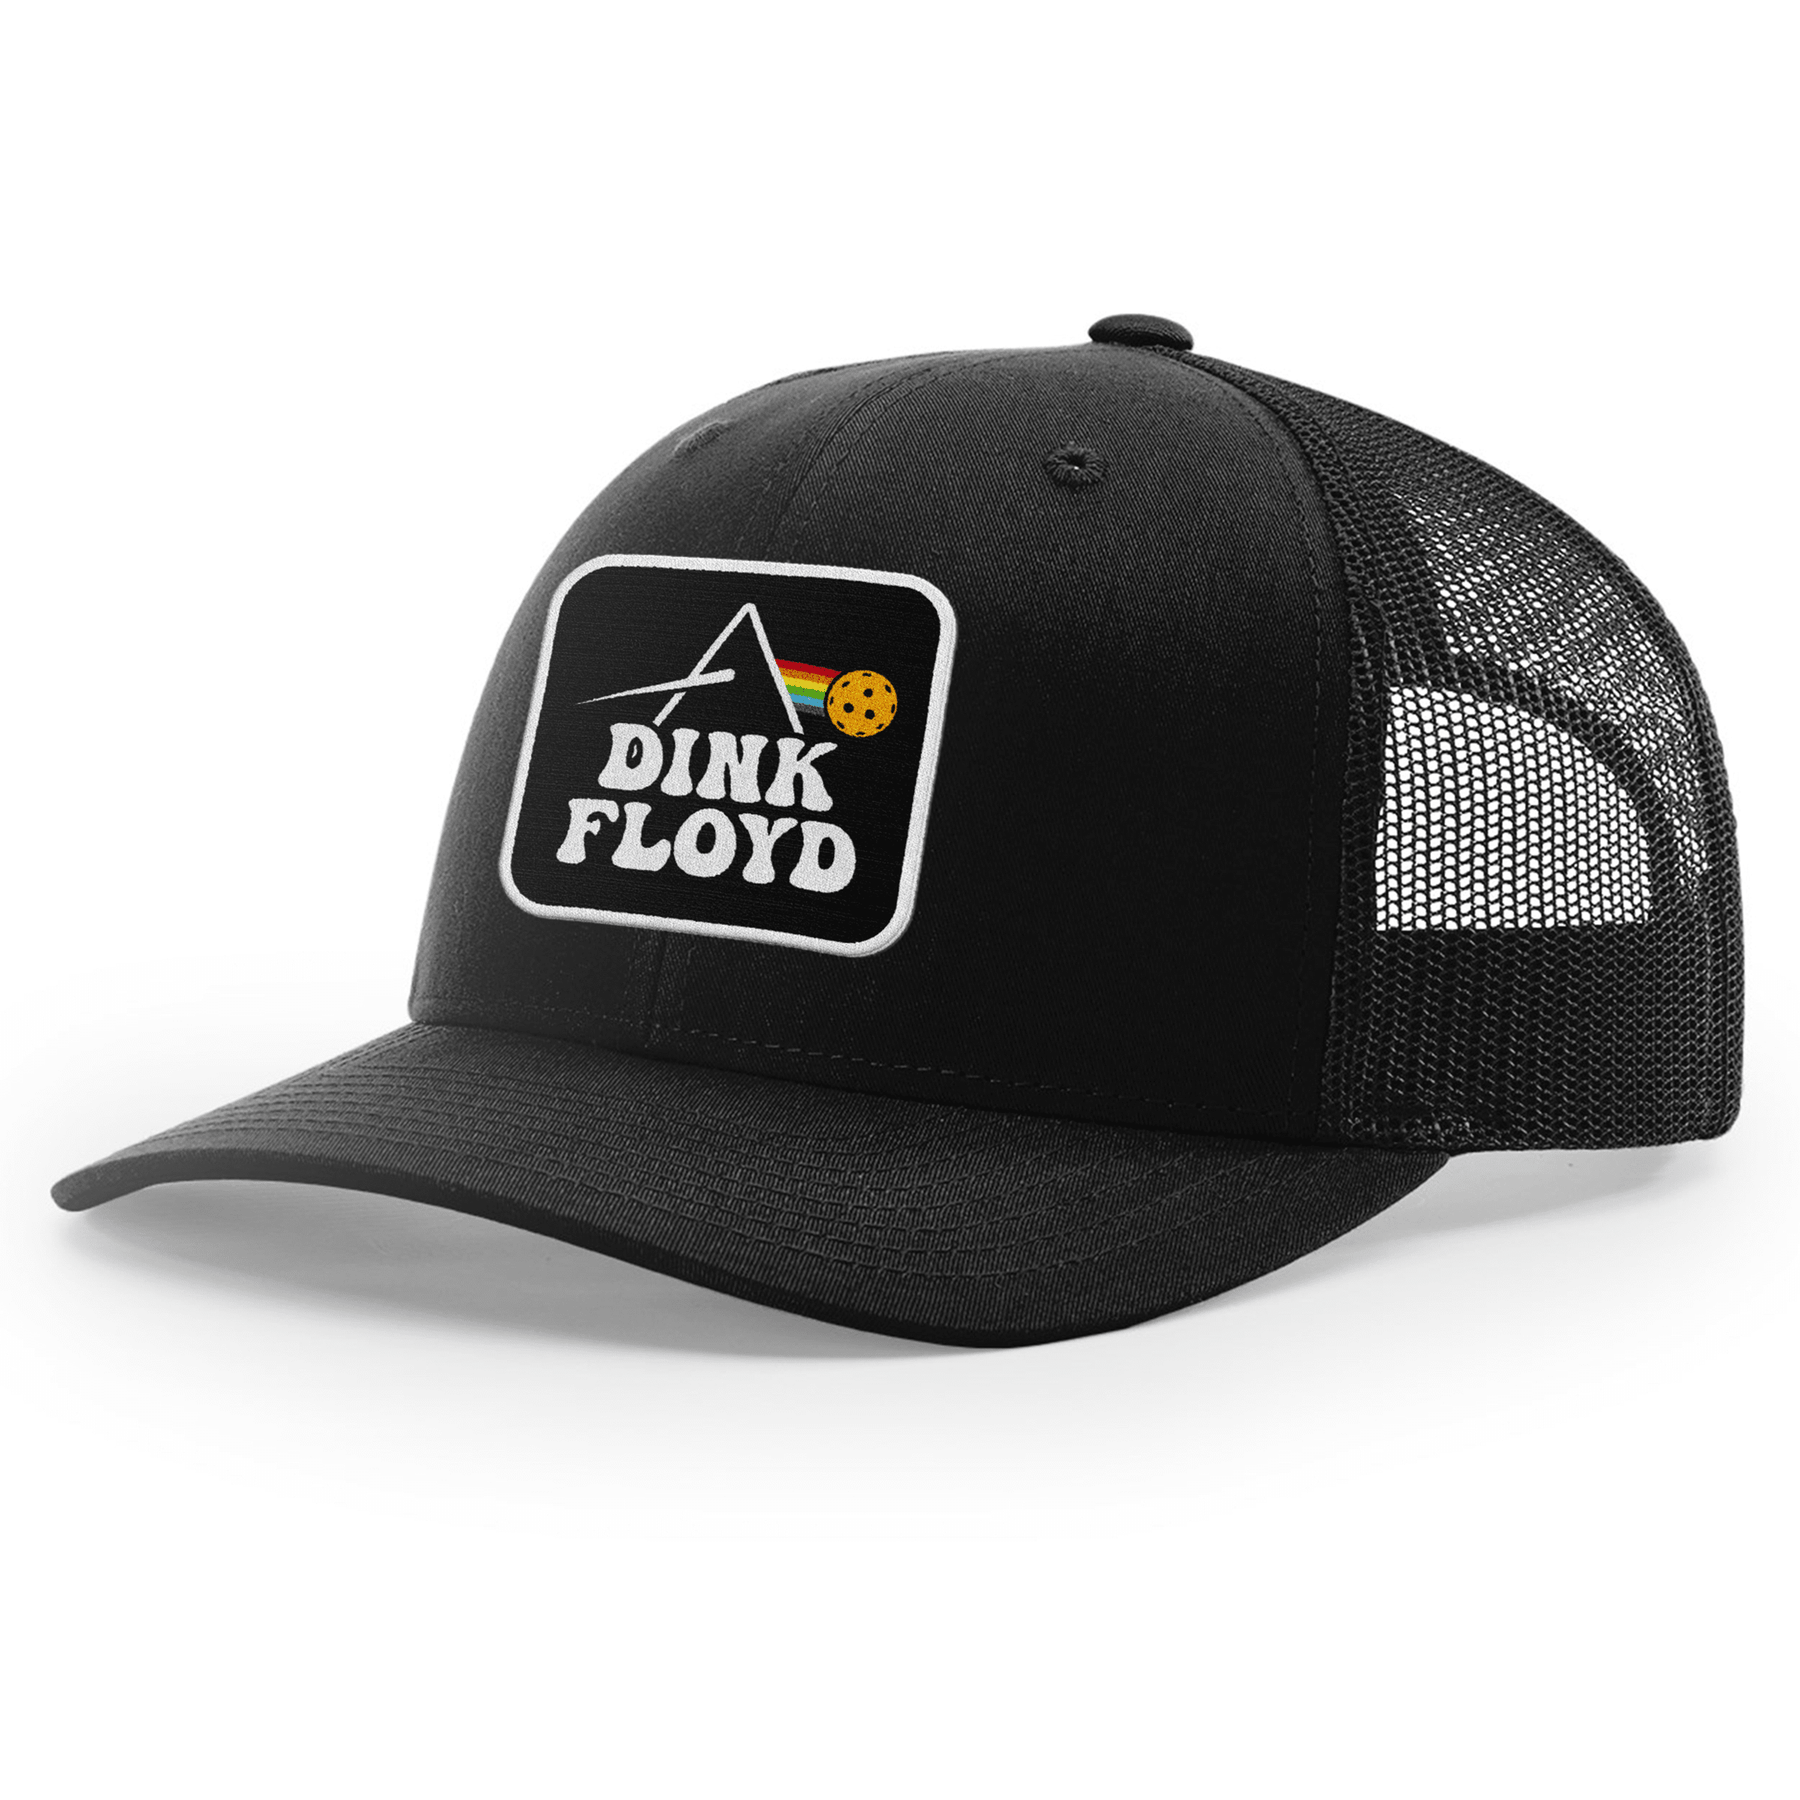 Dink Floyd Hat